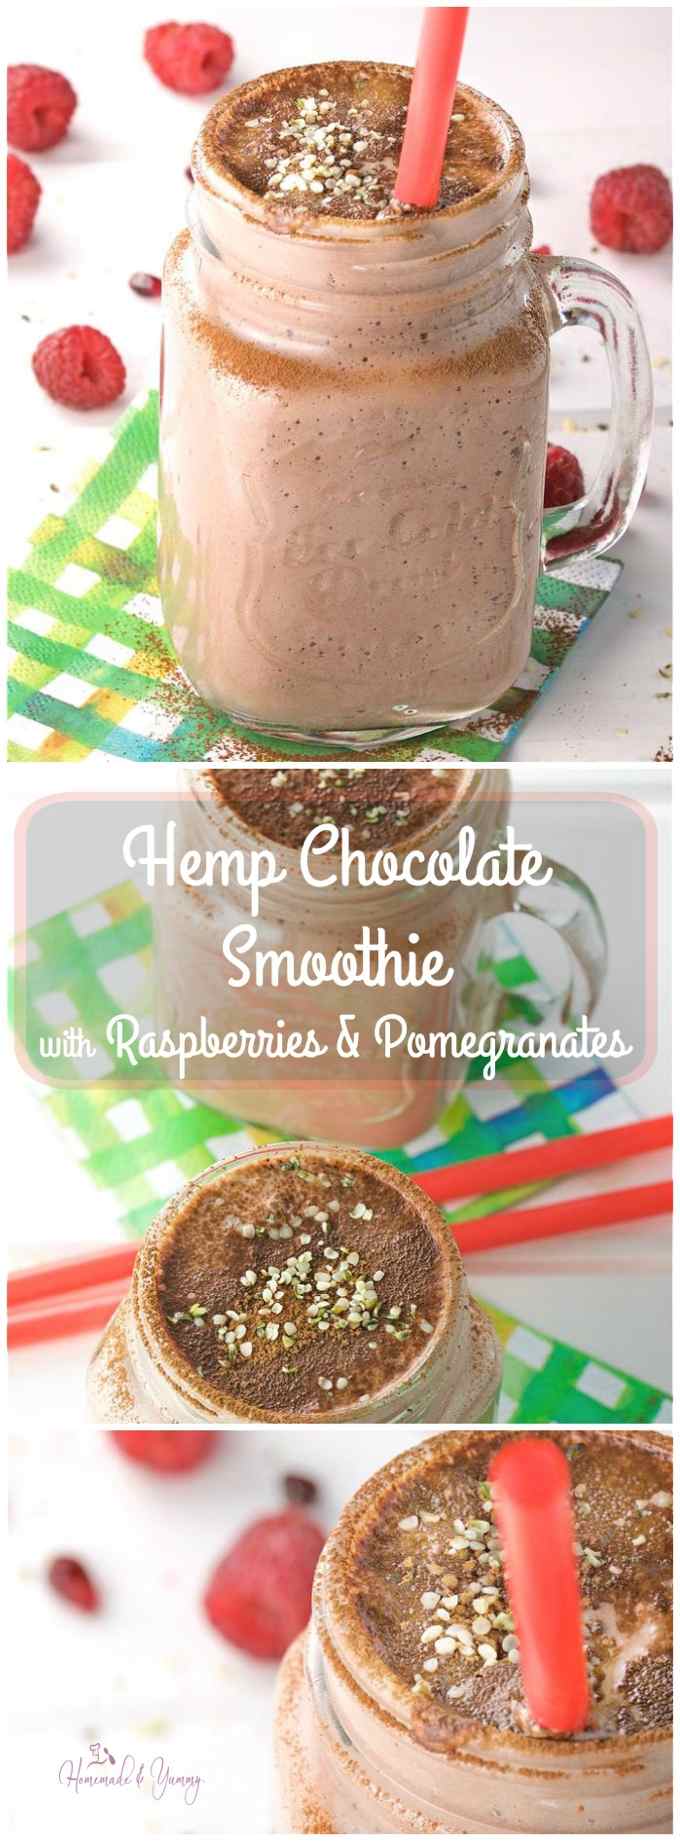 Hemp Chocolate Smoothie with Raspberries & Pomegranates long pin image.